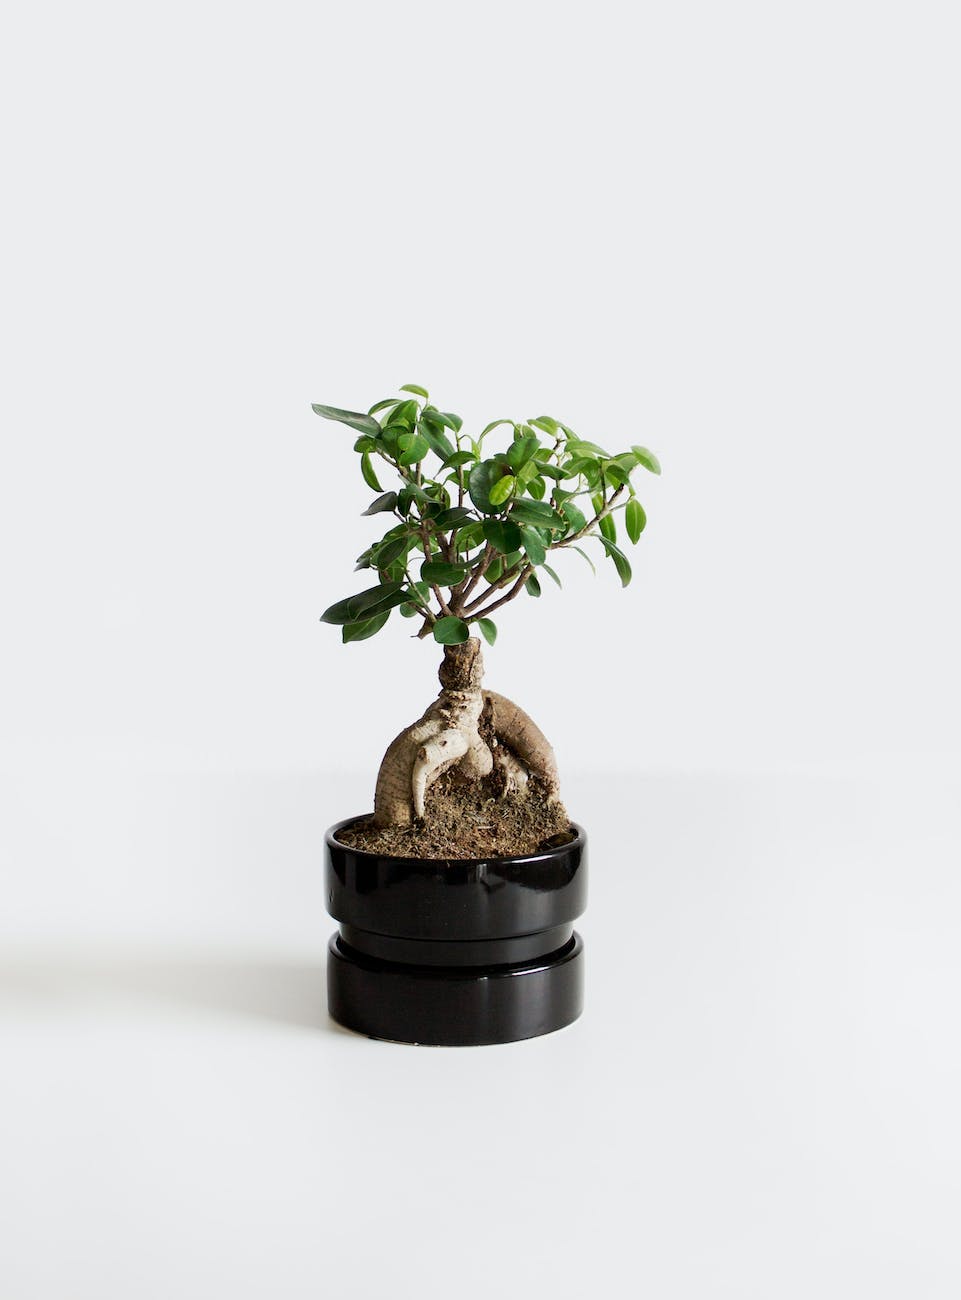 photo of a bonsai tree in a black pot